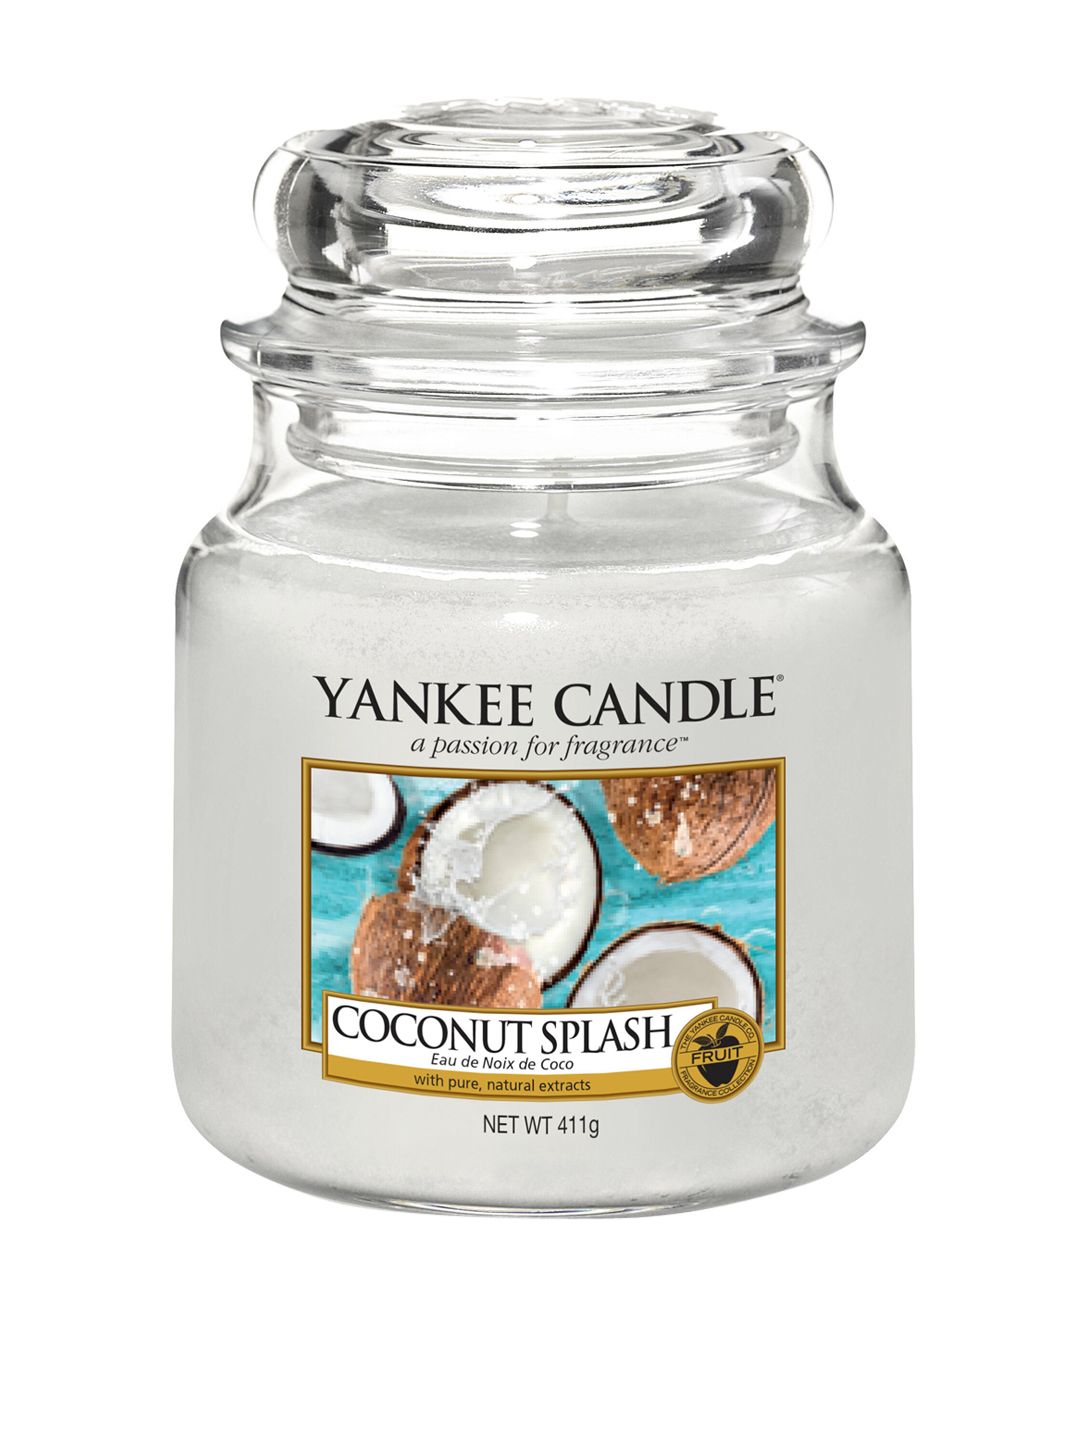 YANKEE CANDLE White Classic Medium Jar Coconut Splash Scented Candle Price in India